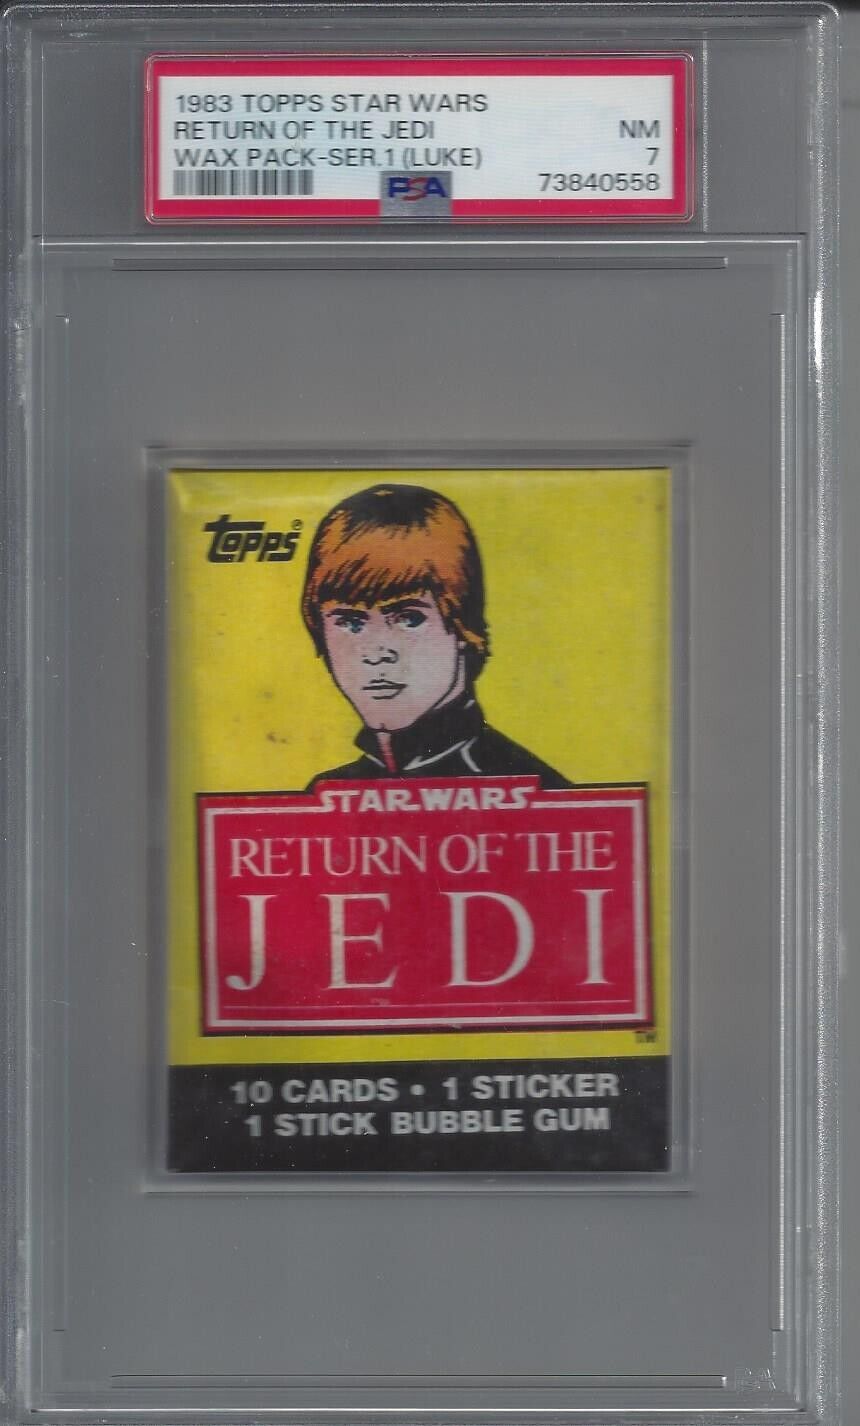 1983 Topps Return of the Jedi (ROTJ) Series I Wax Pack - Luke Skywalker - PSA 7